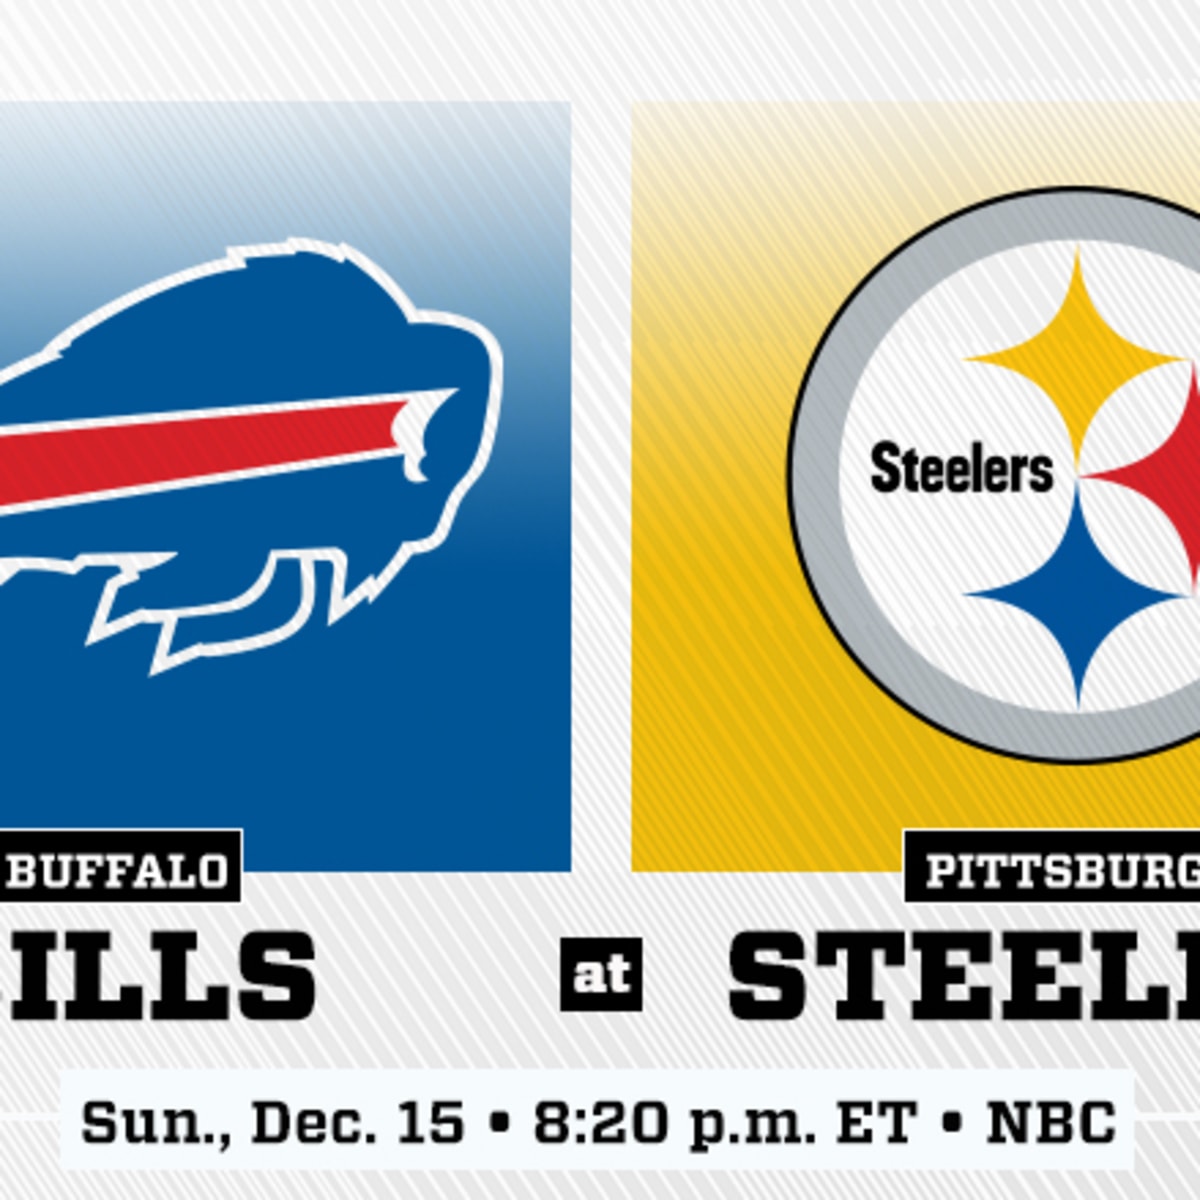 Steelers vs Bills live stream: How to watch Sunday Night Football